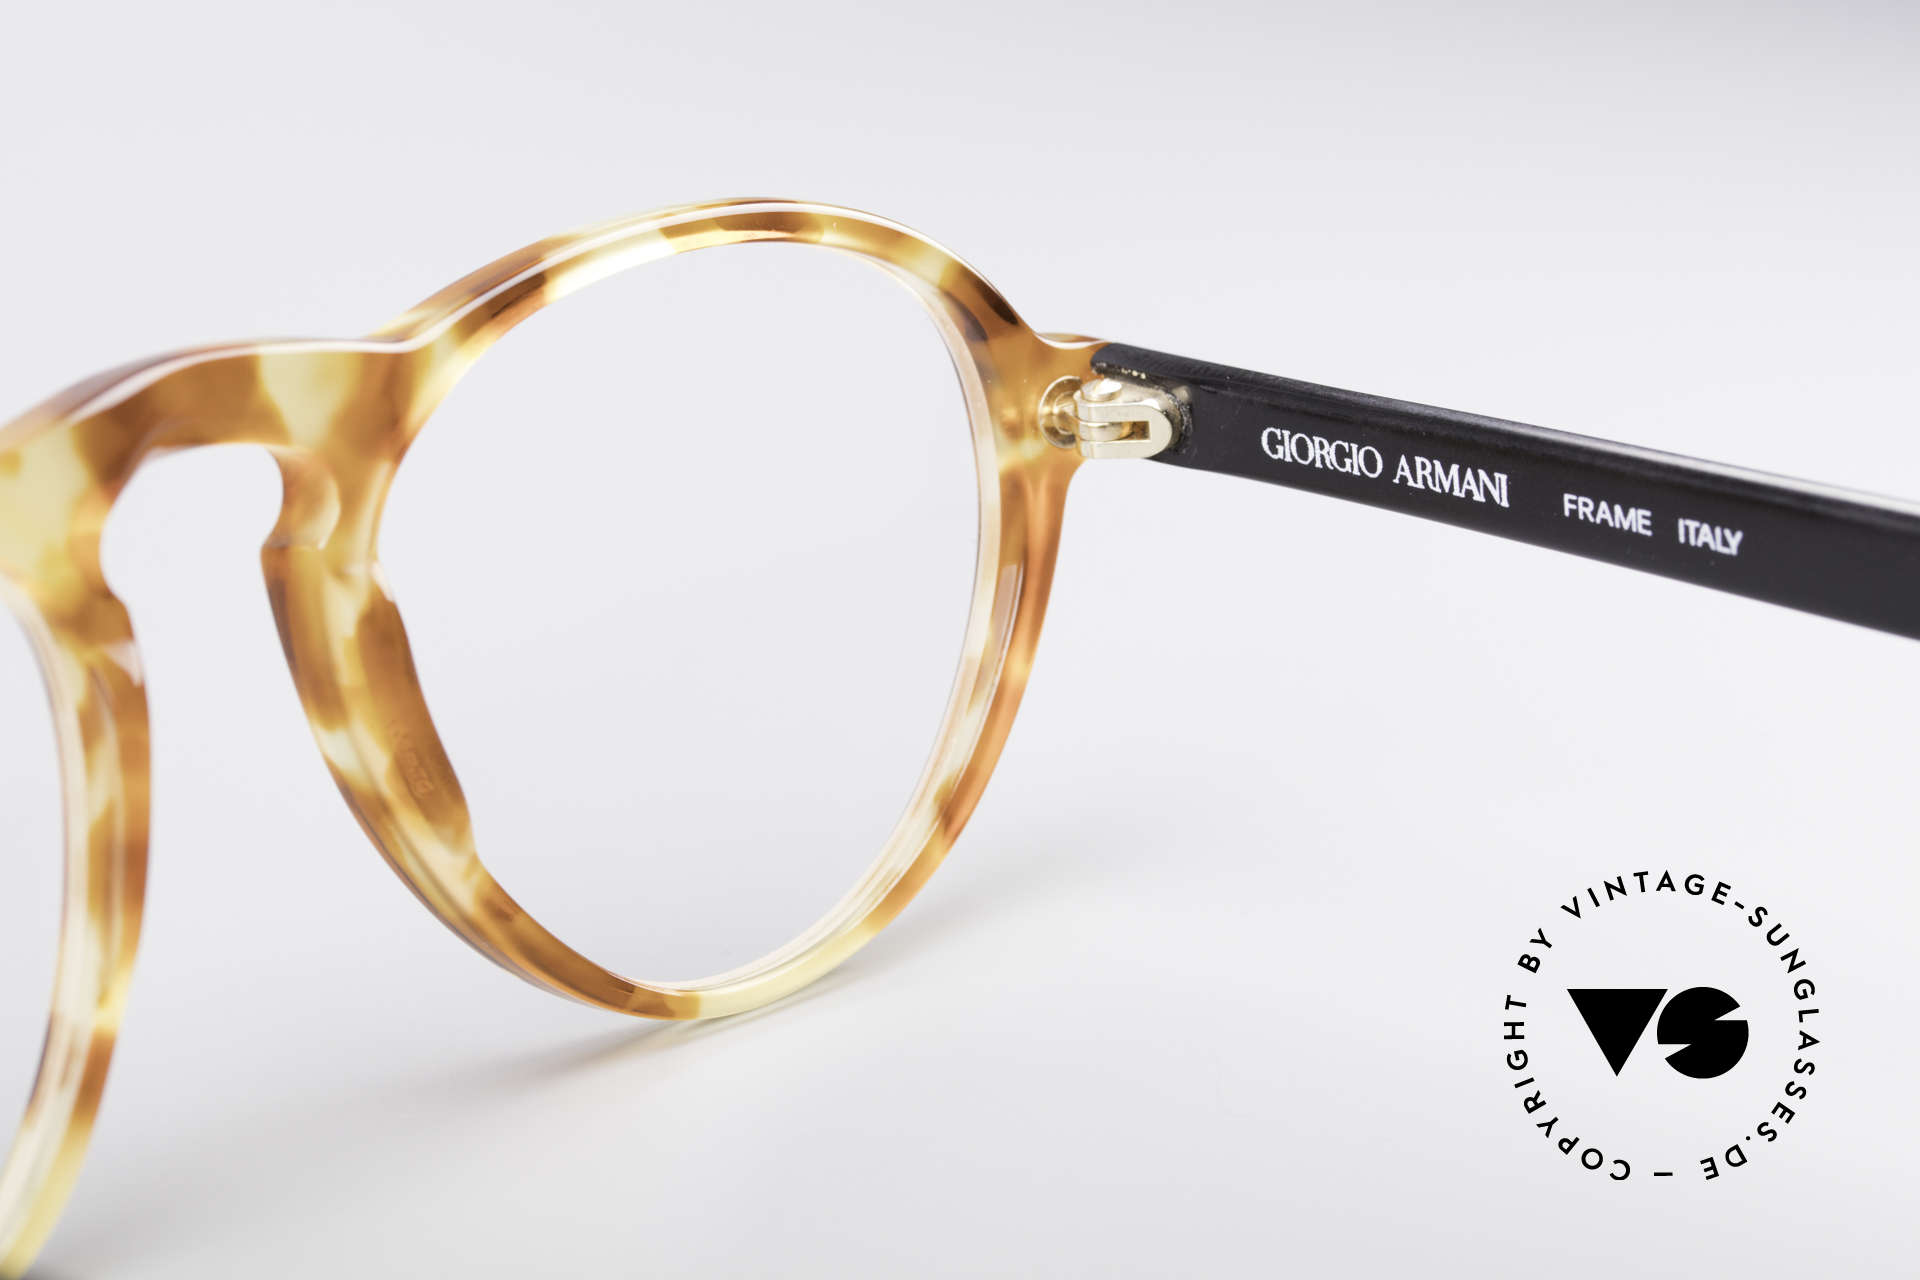 Giorgio Armani 315 True Vintage Eyeglass Frame, Size: small, Made for Men